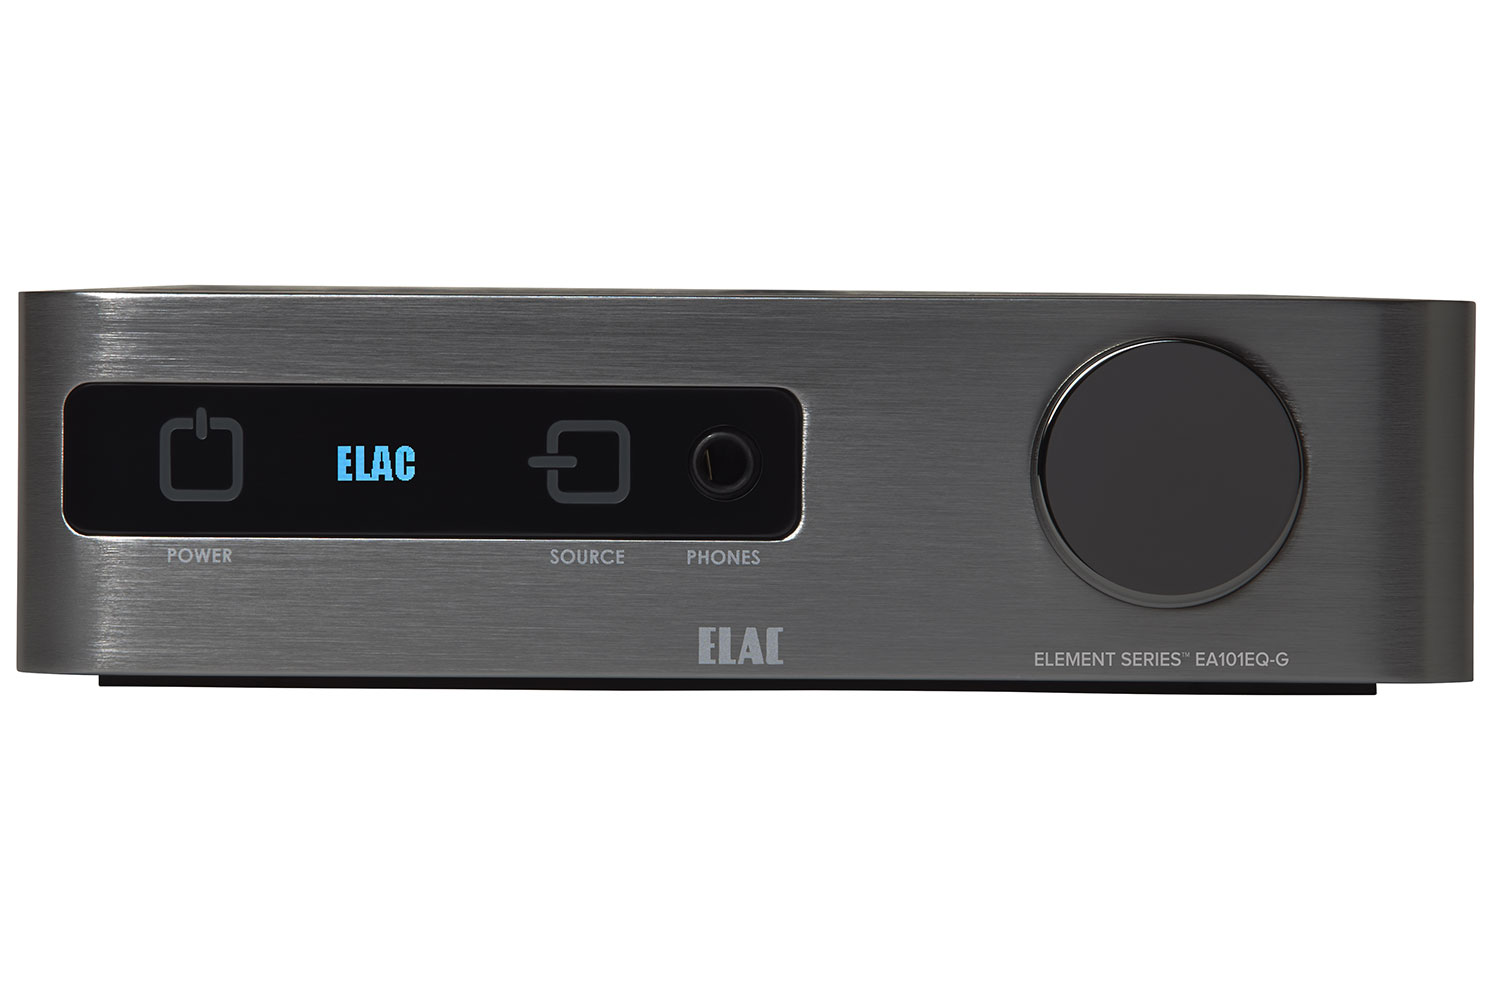 elac element ea101eq g integrated amplifier announced 4